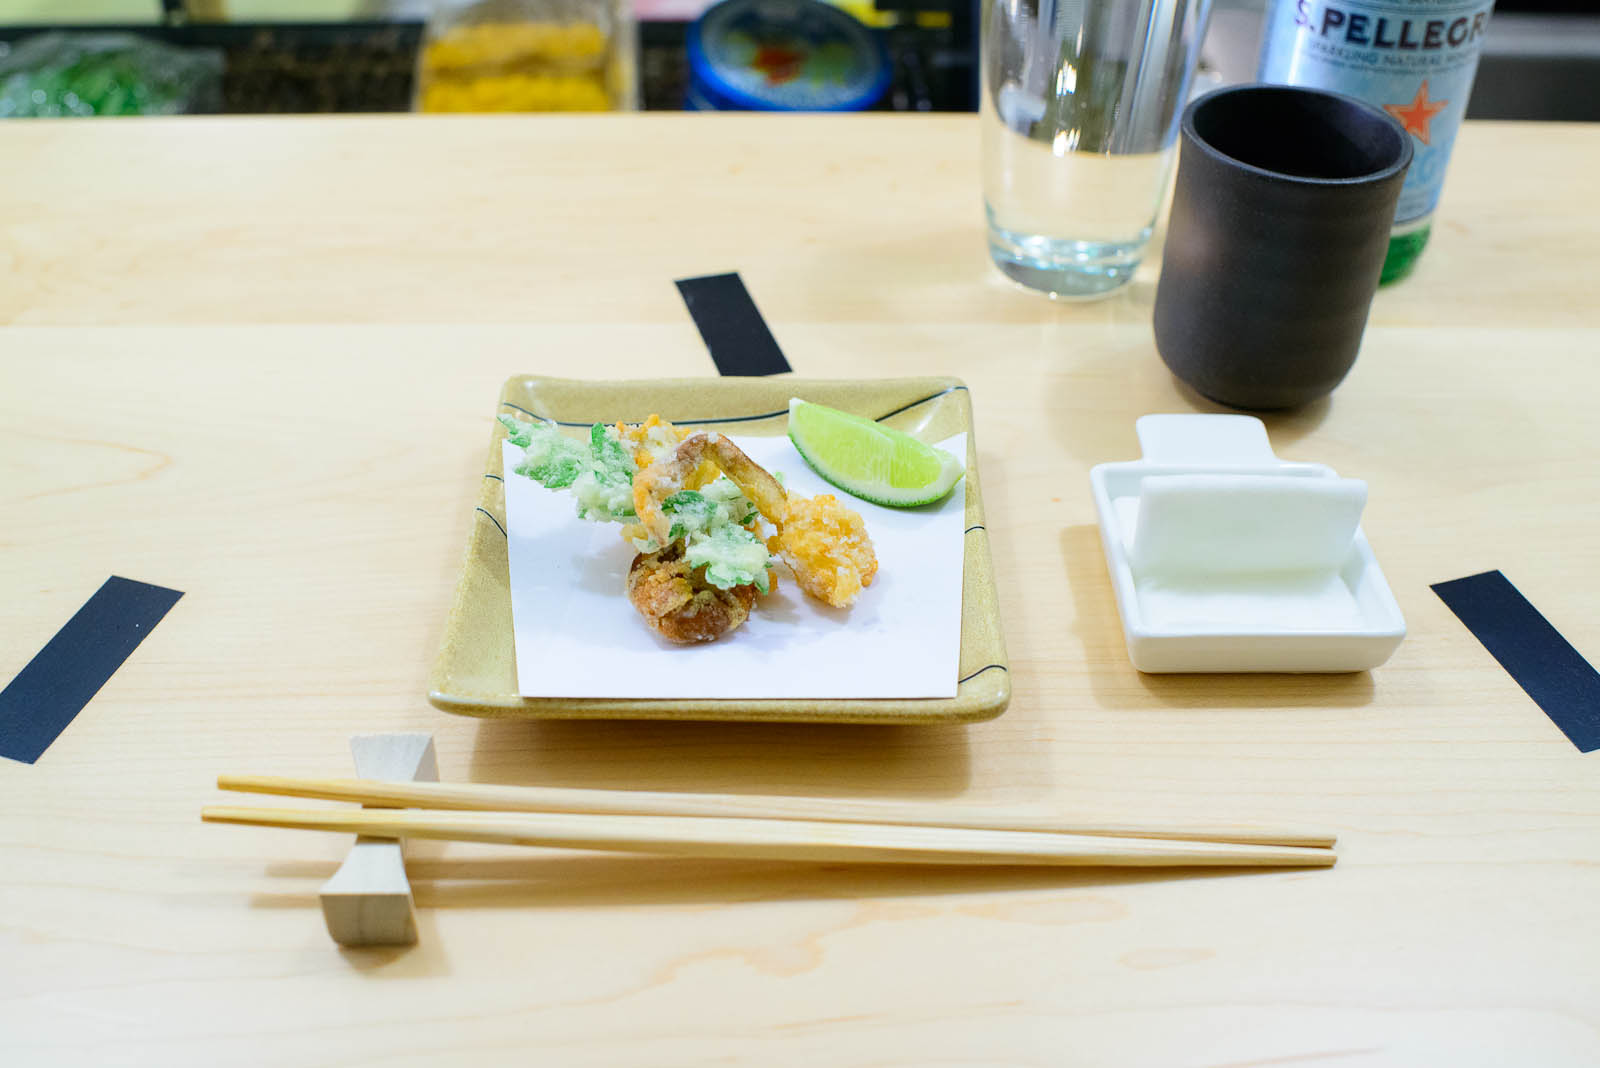 4th Course: Softshell crab tempura, yomogi "from central park"